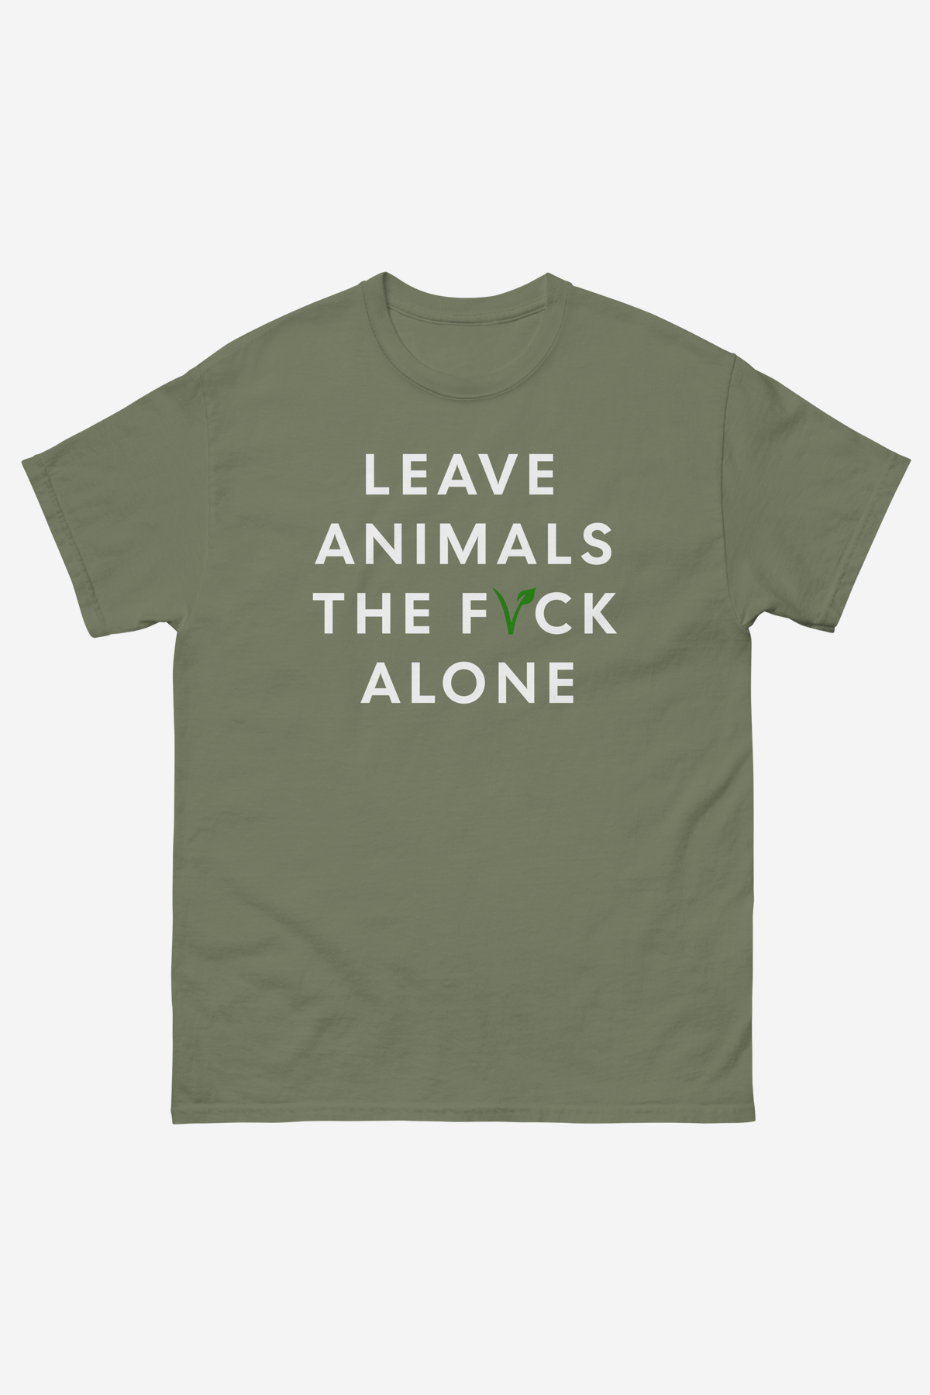 Leave Animals Alone Men's classic tee